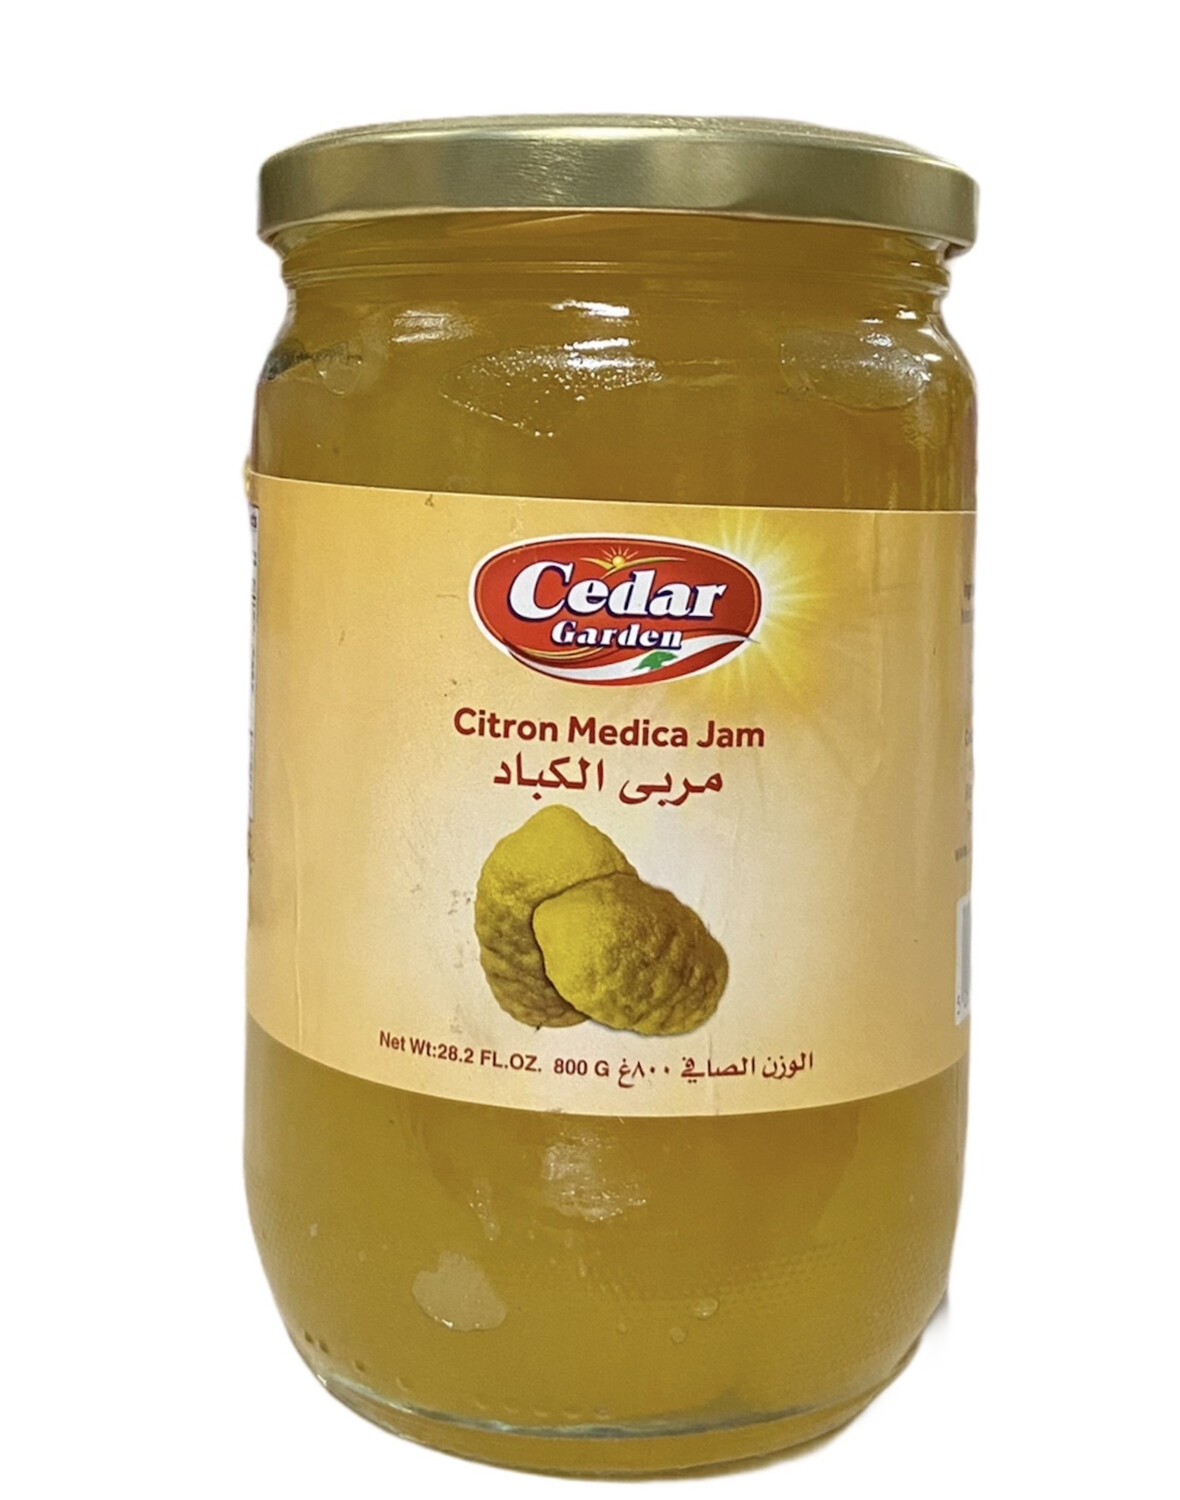 Cedar Garden Citron Medica Jam 12x800g